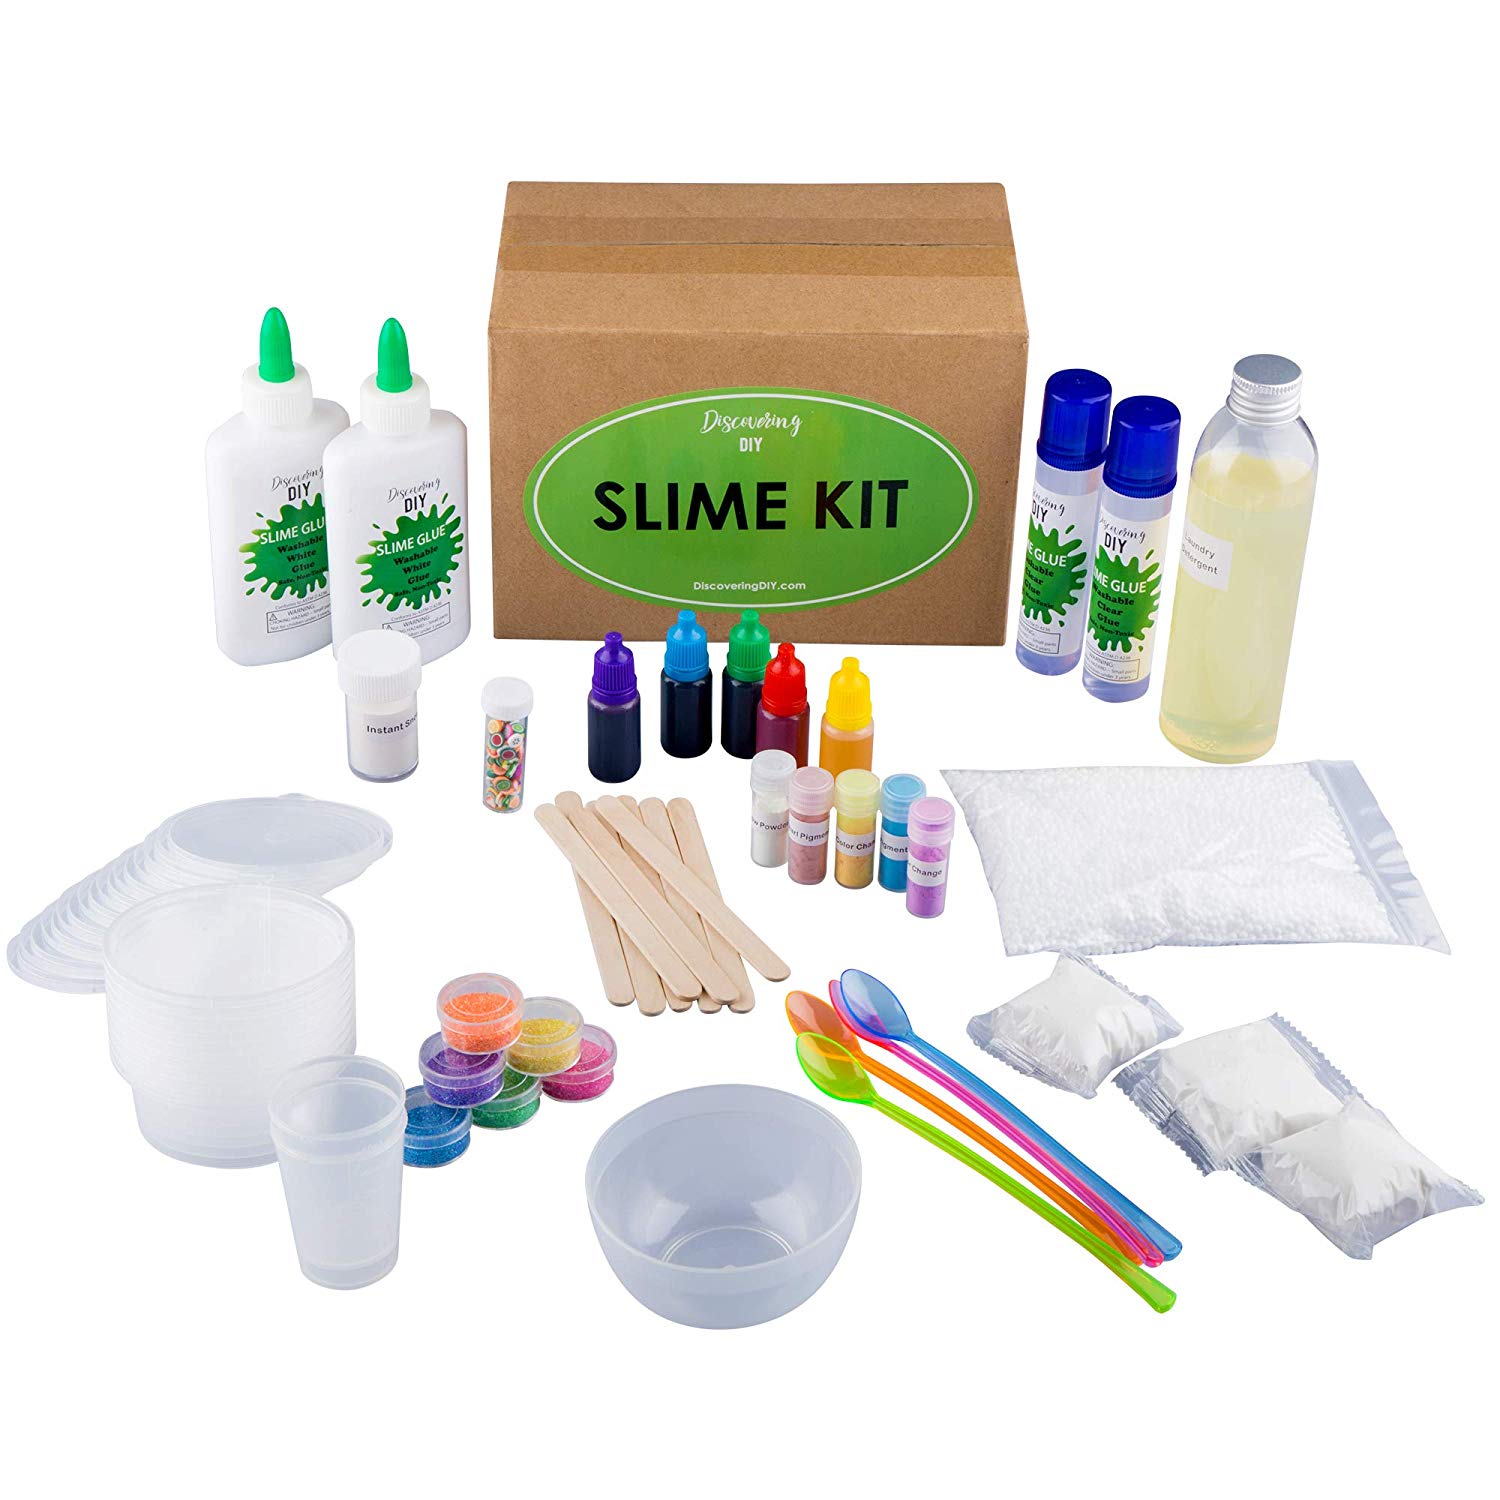 Ultimate DIY Slime Kit for Kids Only $19.95!